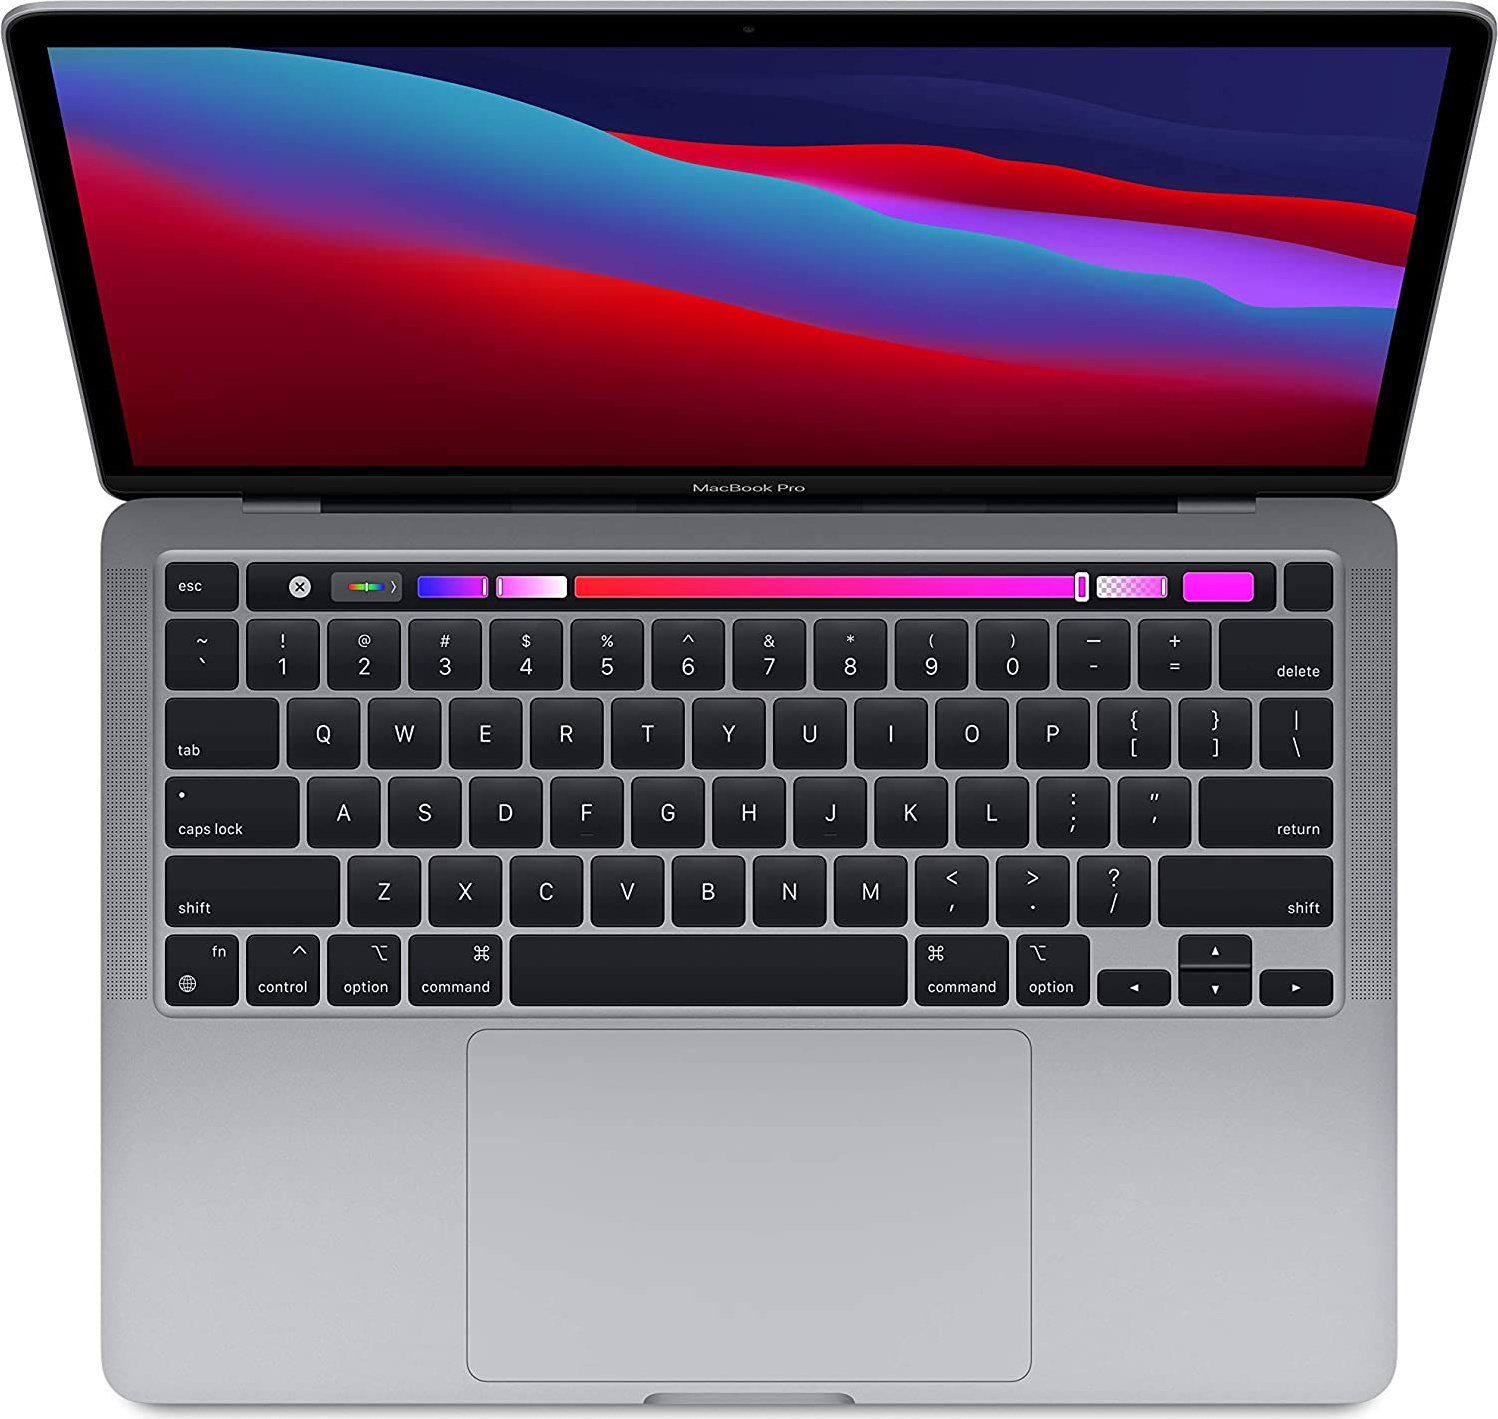 2020 Apple MacBook Pro with Apple M1 Chip (13-inch, 8GB RAM, 256GB SSD Storage) - Space Gray